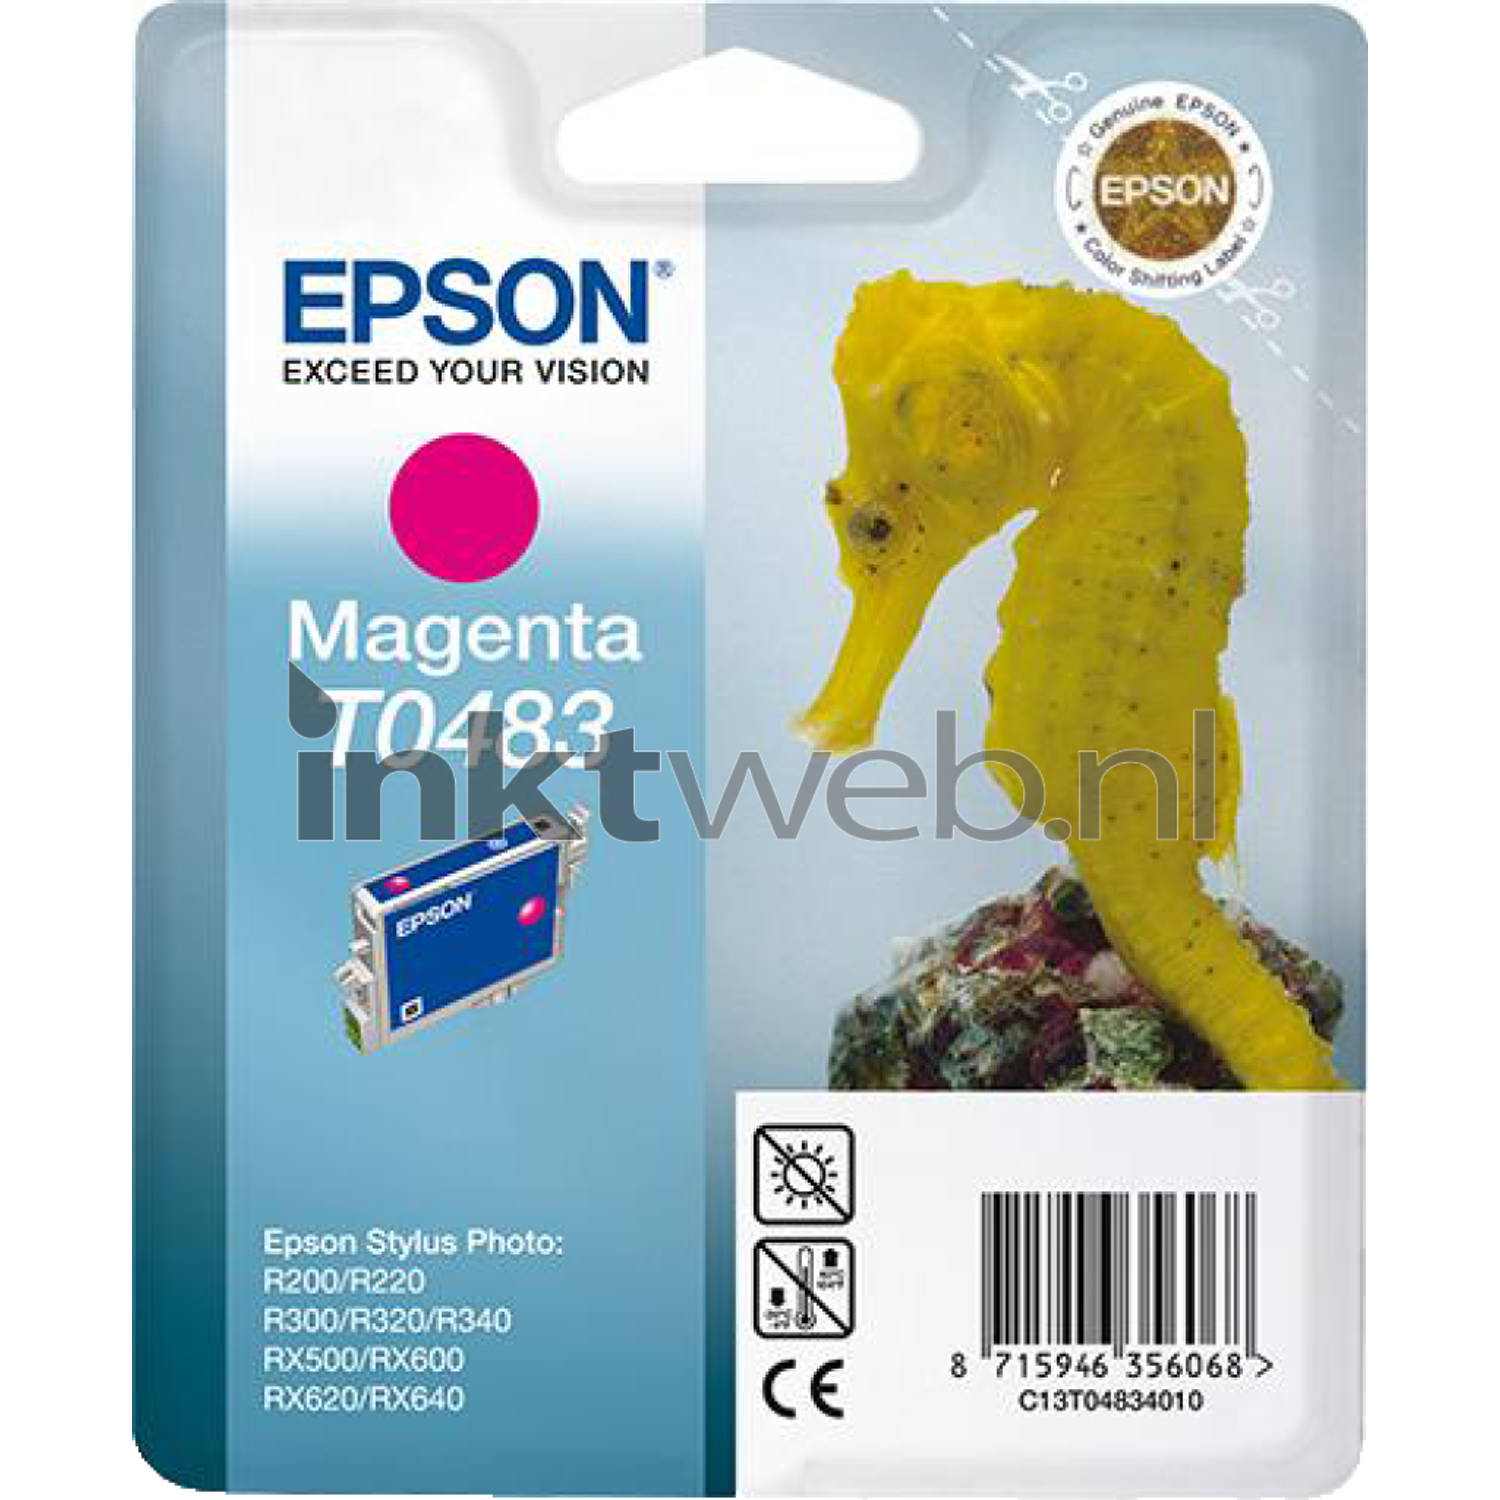 Epson T0483 magenta cartridge